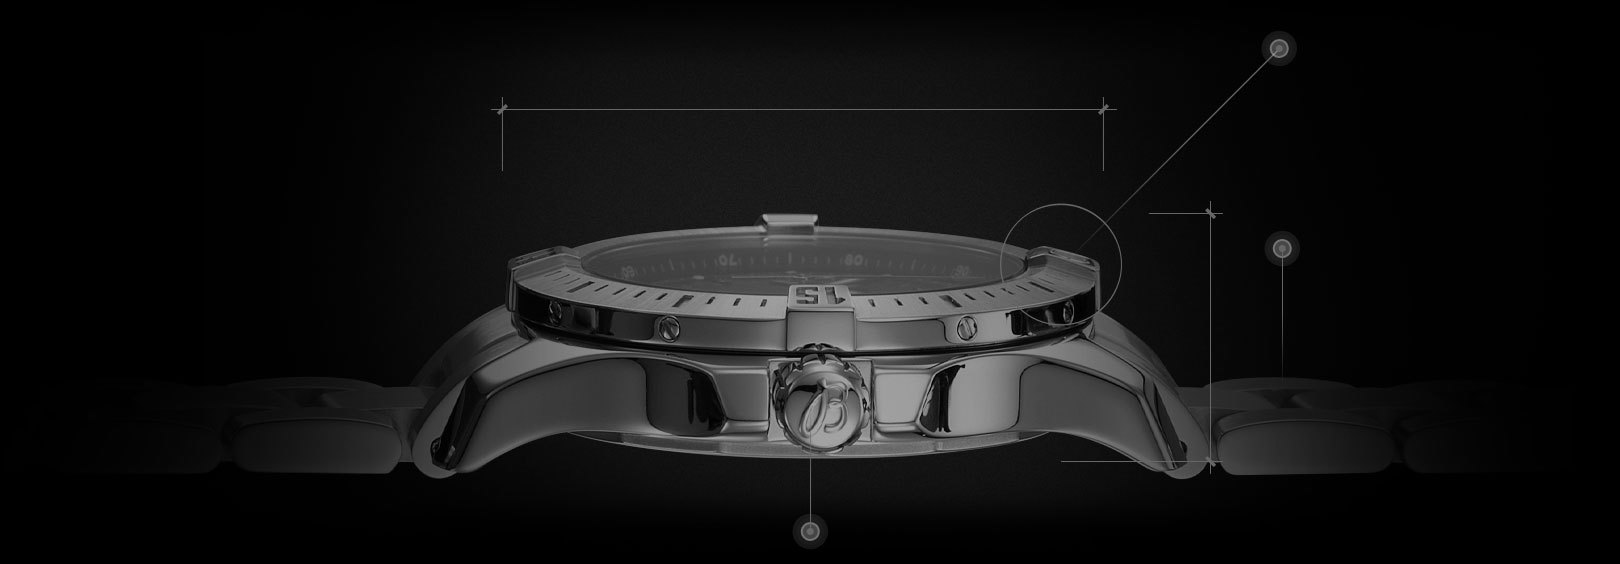 Replica Breitling Horloges Nederland